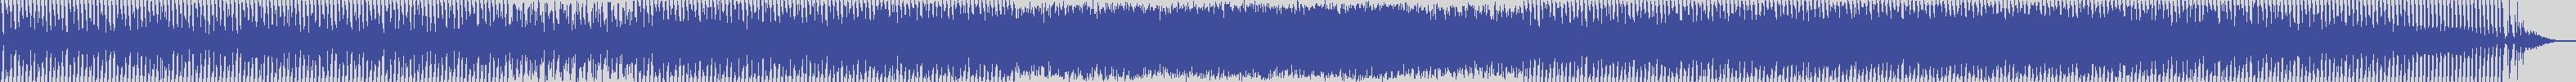 atomic_recordings [AR016] Jean Rone - Subliminal [Original Mix] audio wave form